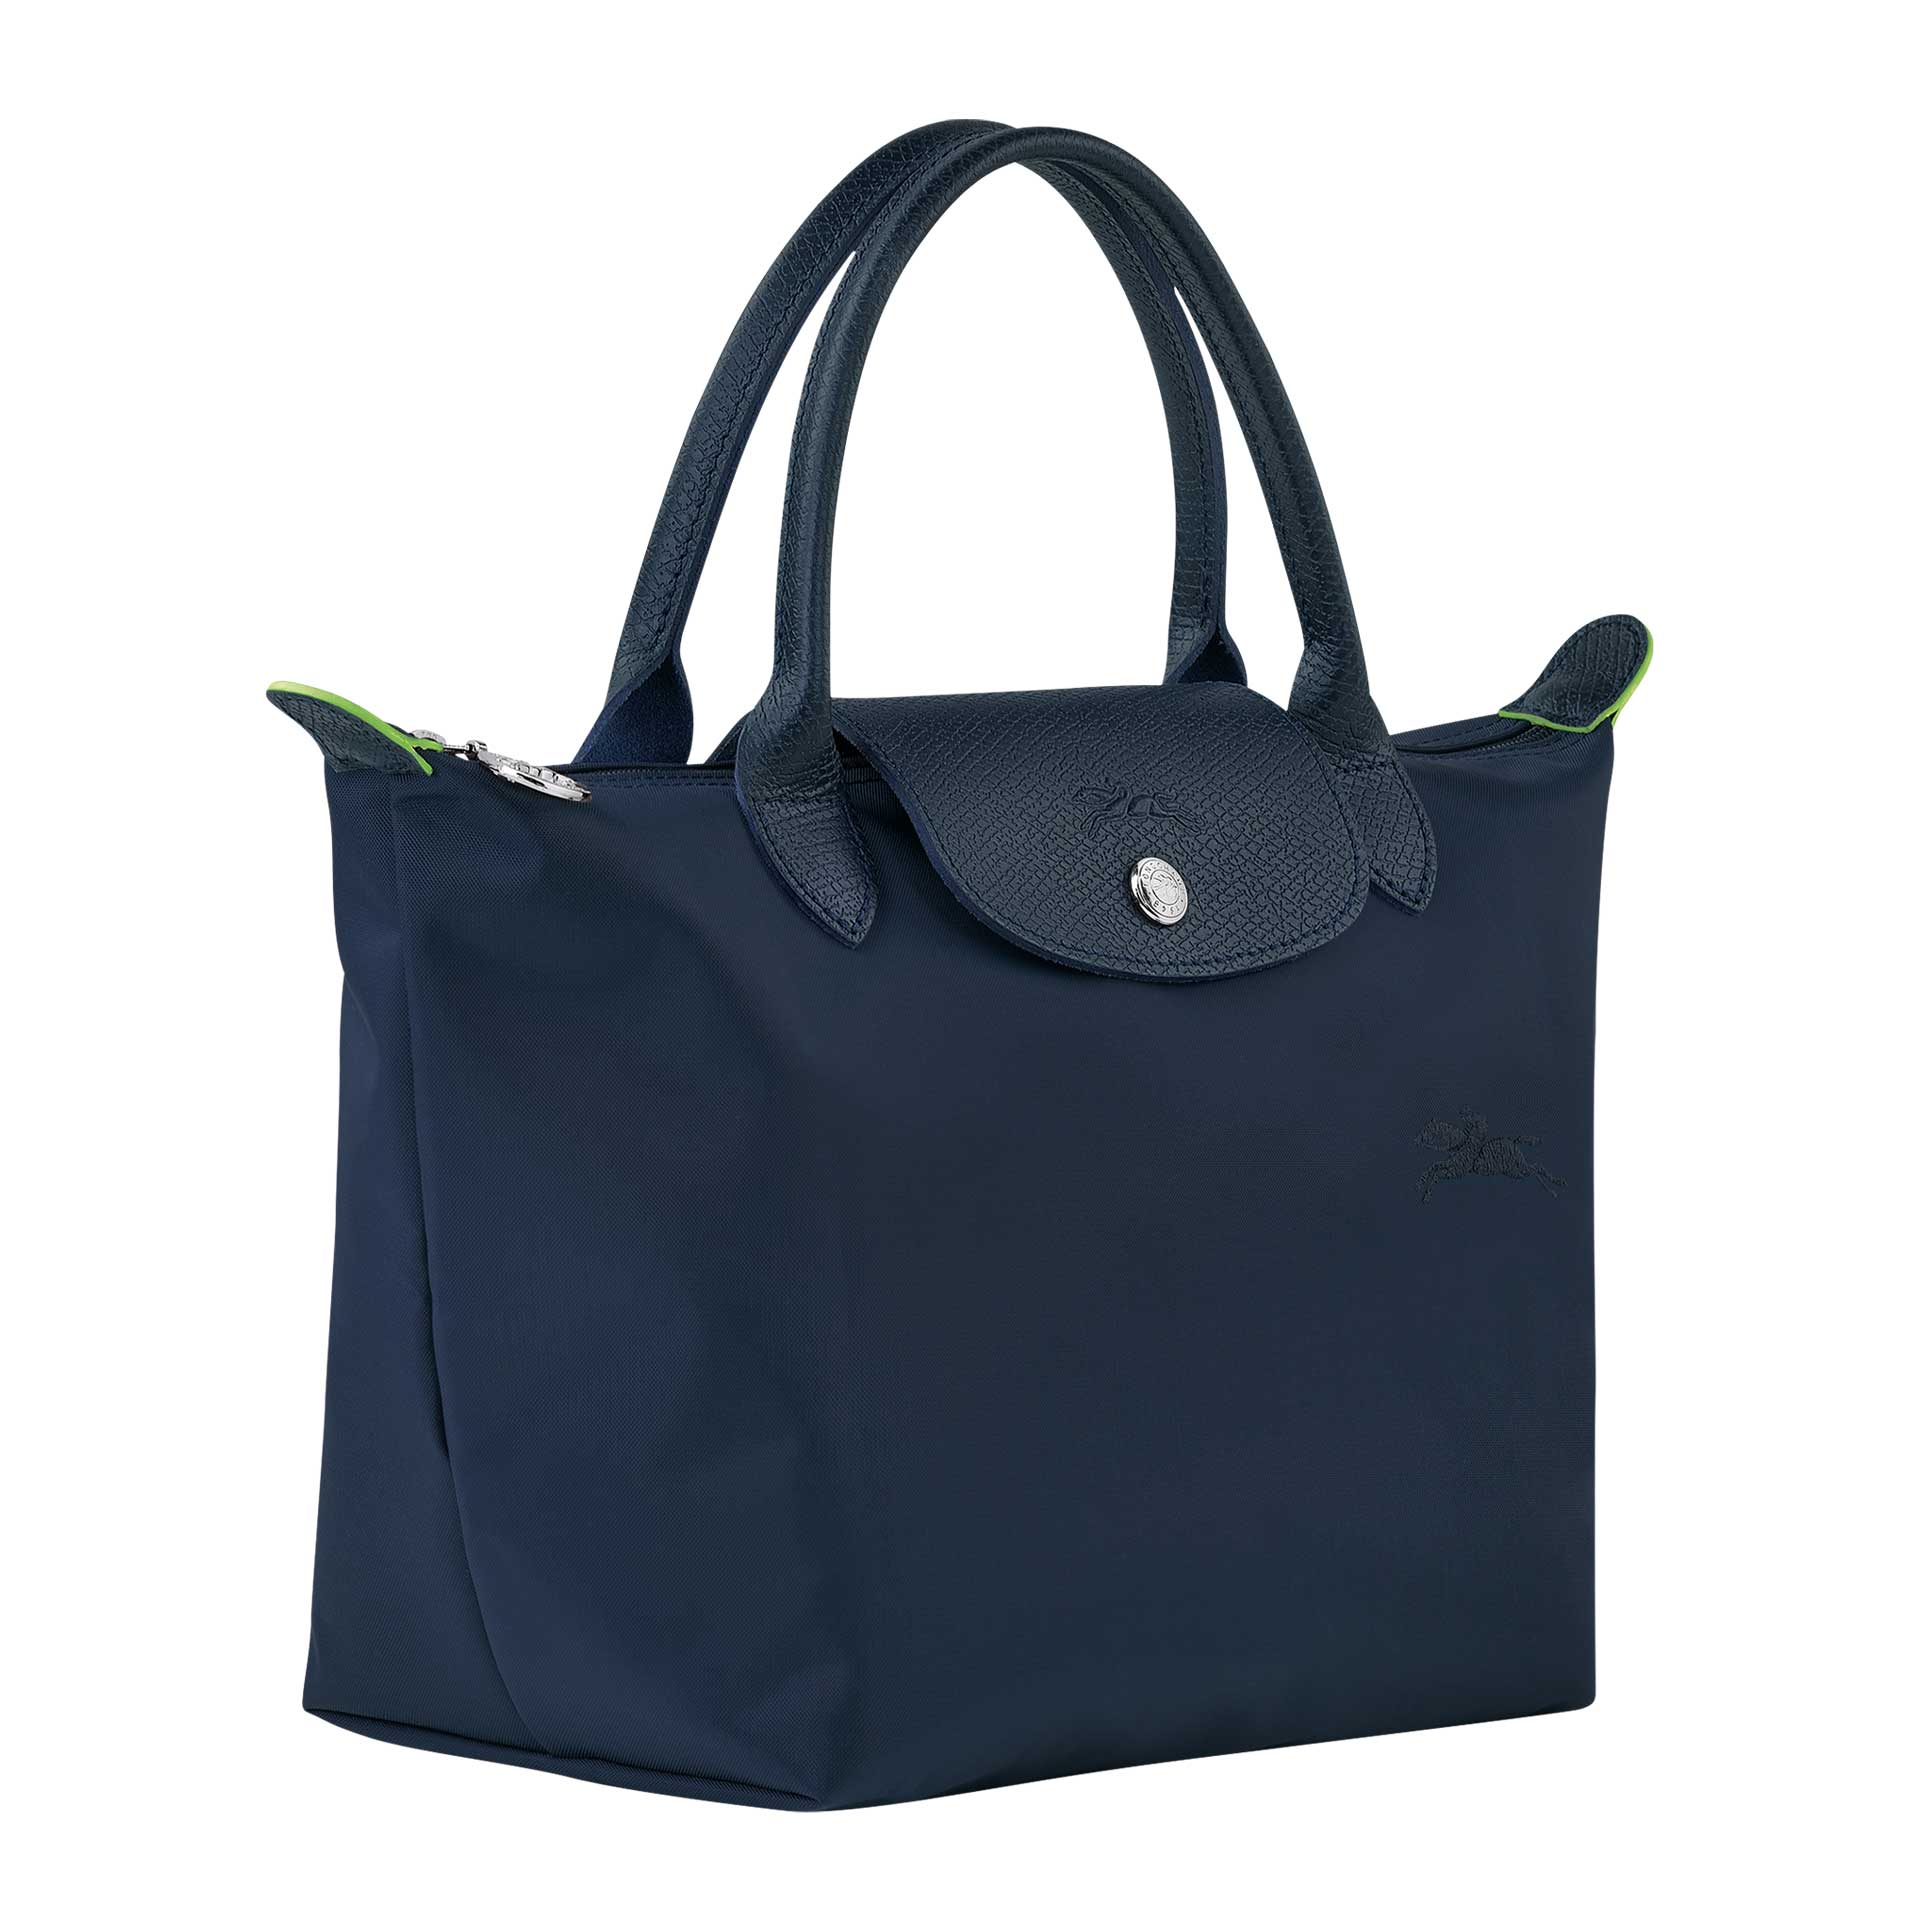 Longchamp Le Pliage Green Handtasche aus Recycling Material navy